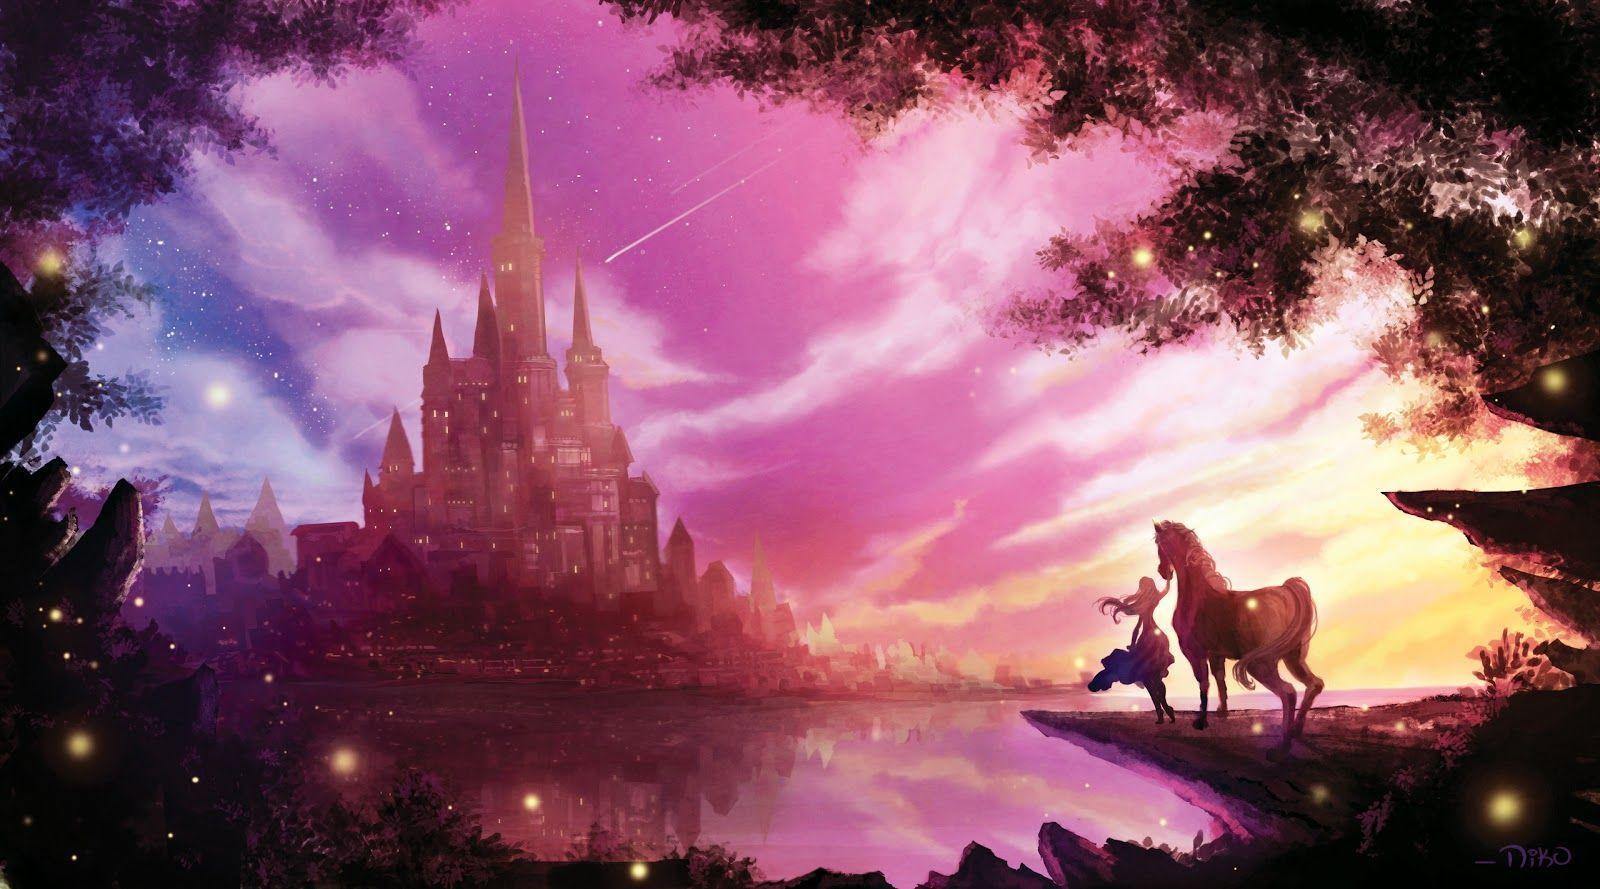 The Art of Niko Niko: Disney Castle: Wish Upon a Star